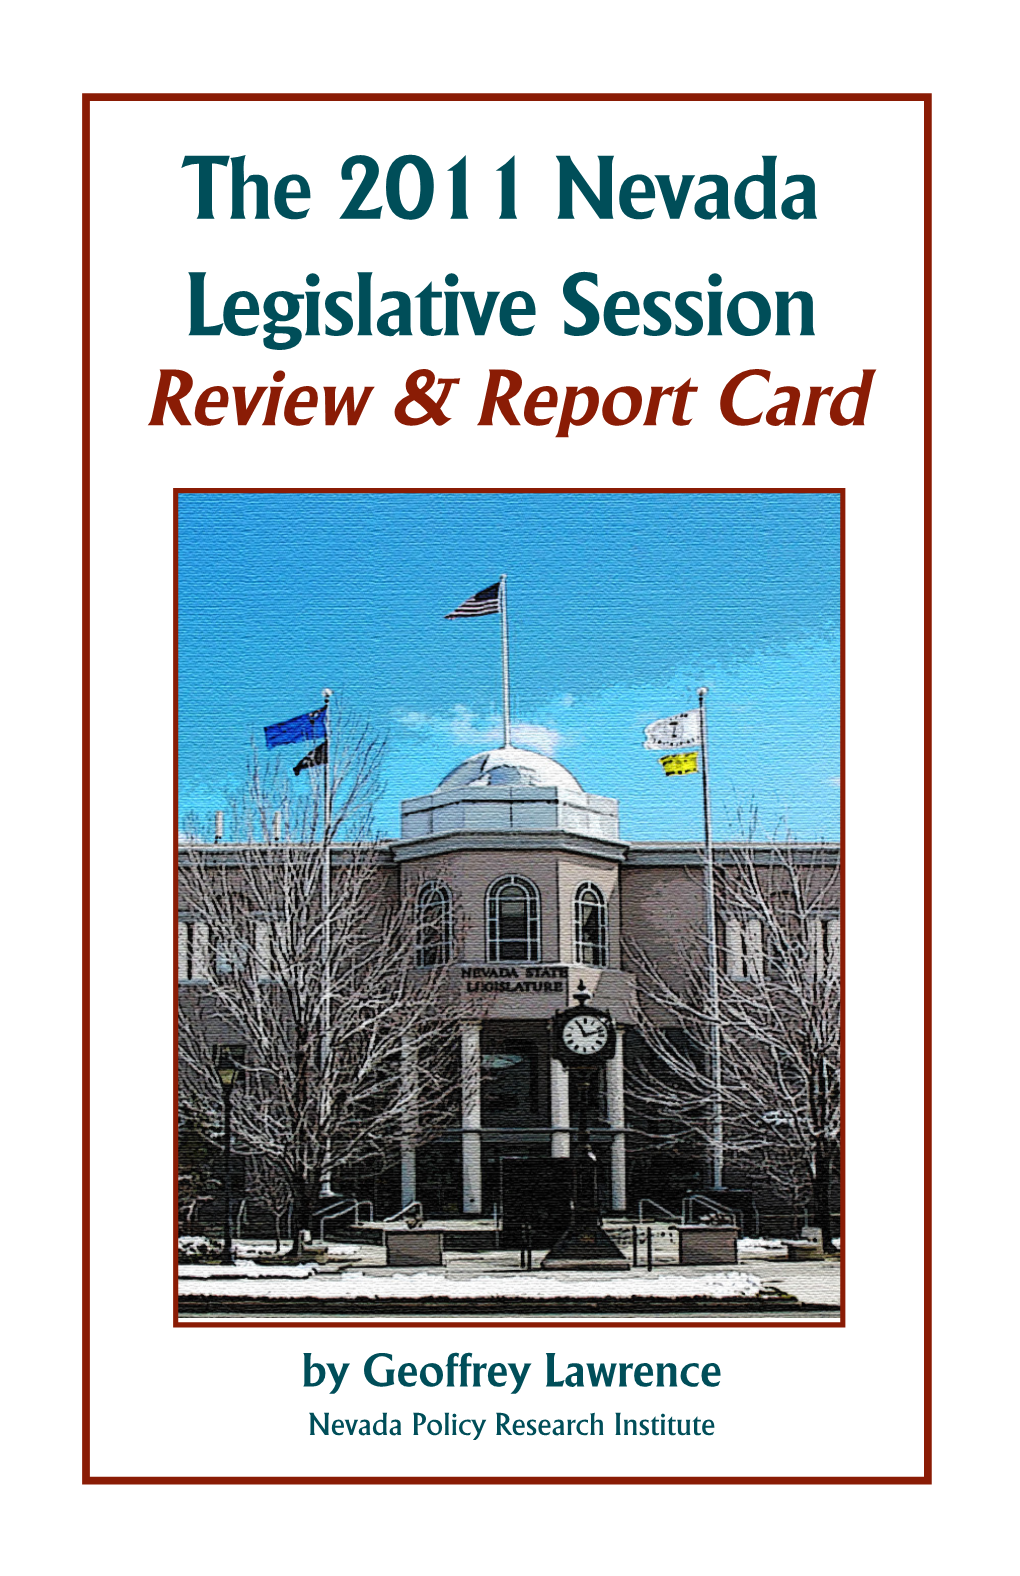 The 2011 Nevada Legislative Session Review & Report Card